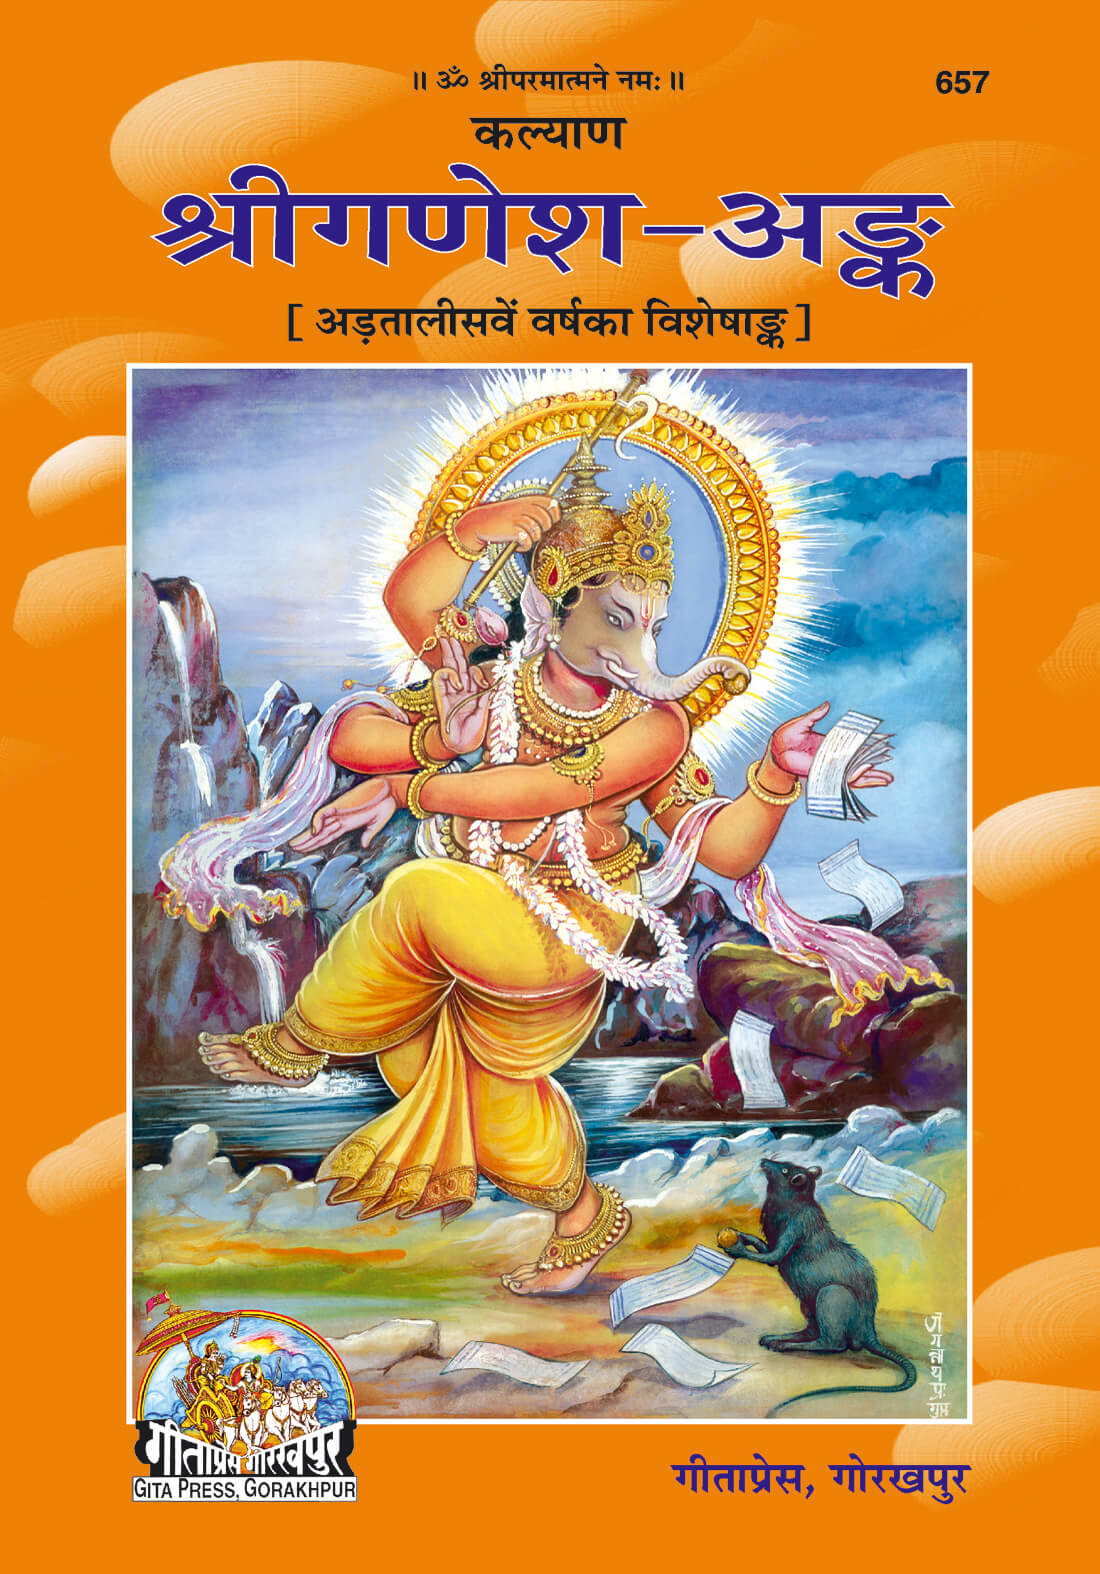 Shri Ganesh Ank by Gita Press